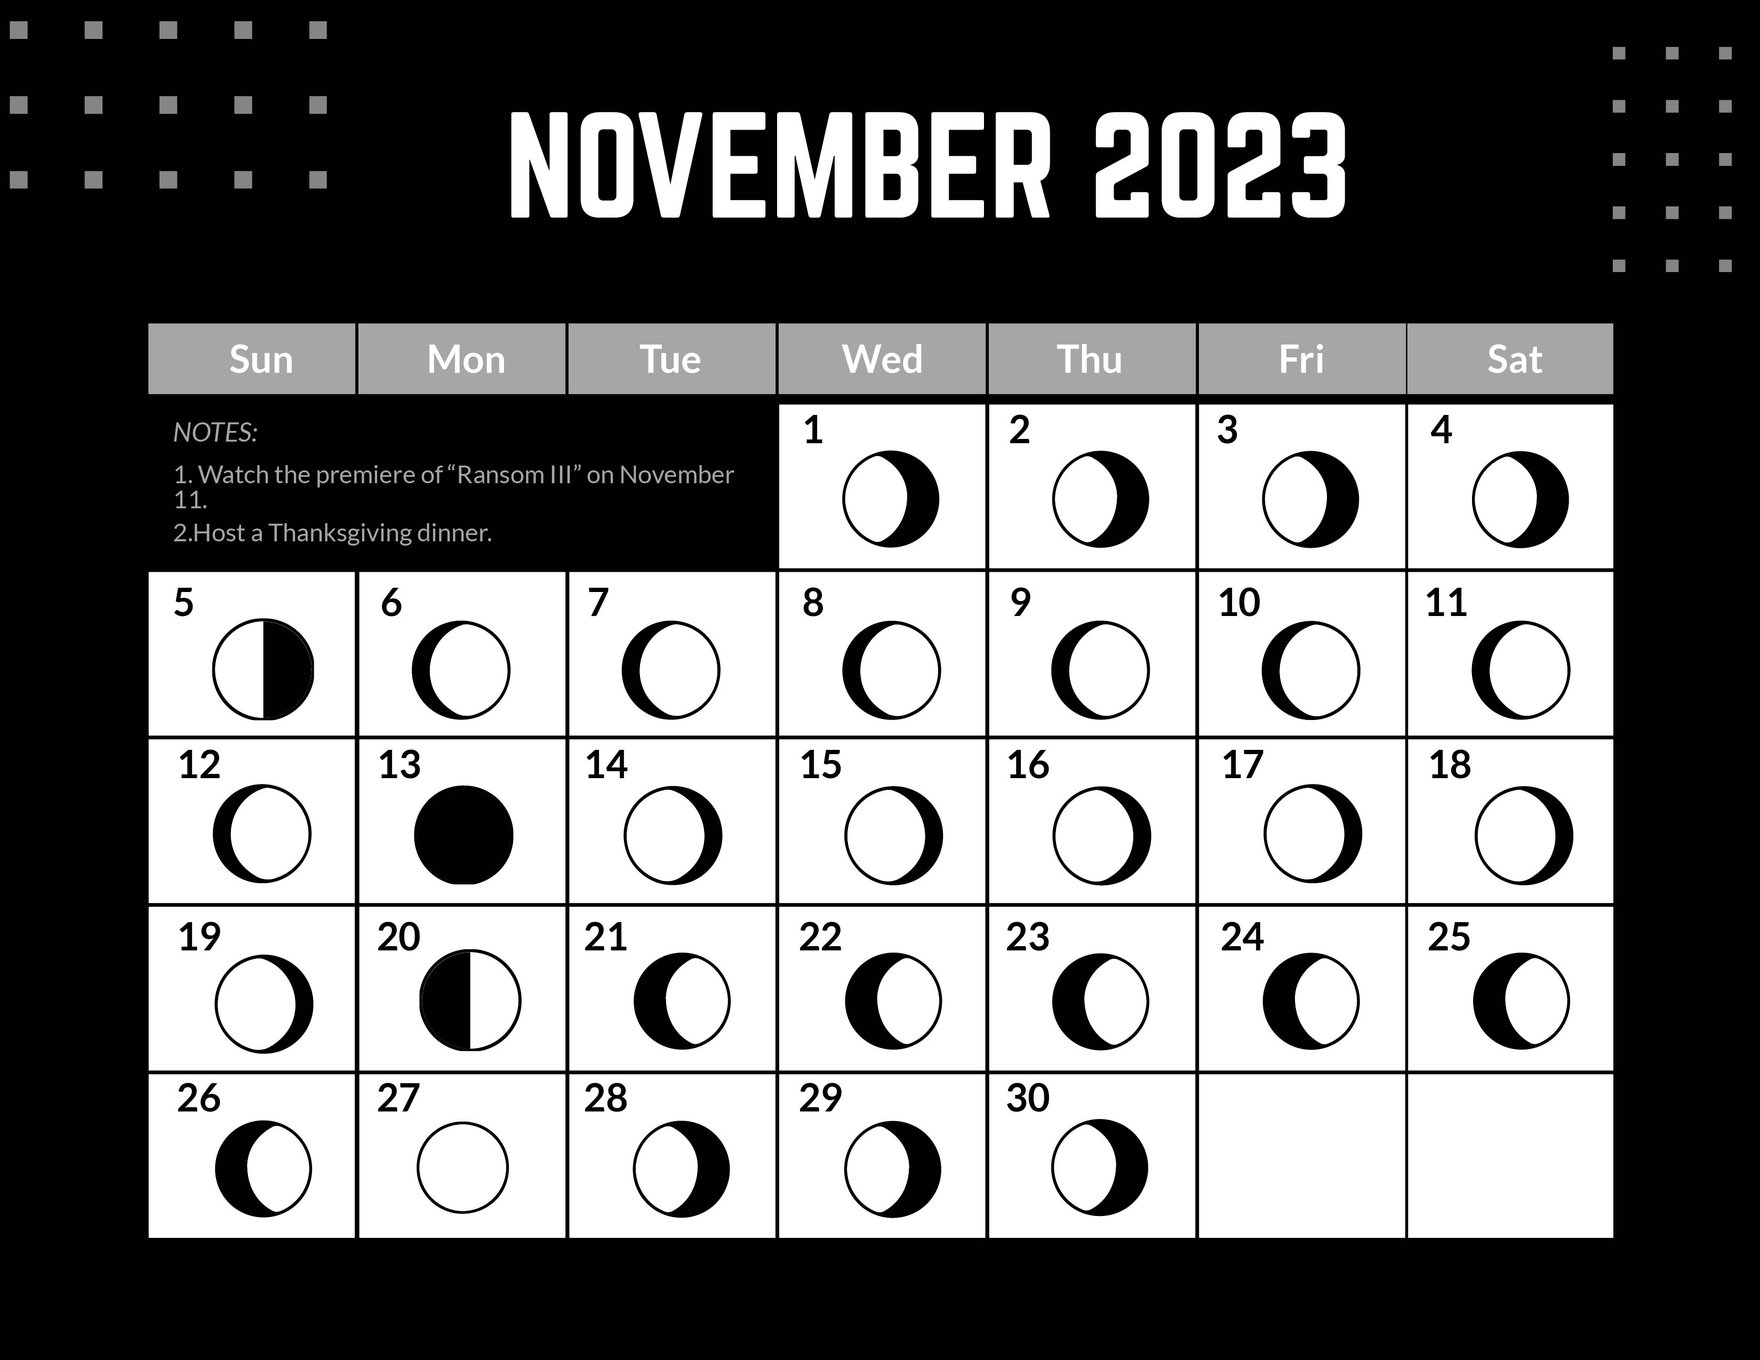 November 2023 Calendar Template With Moon Phases in Word, Google Docs, Excel, Google Sheets, Illustrator, EPS, SVG, JPG